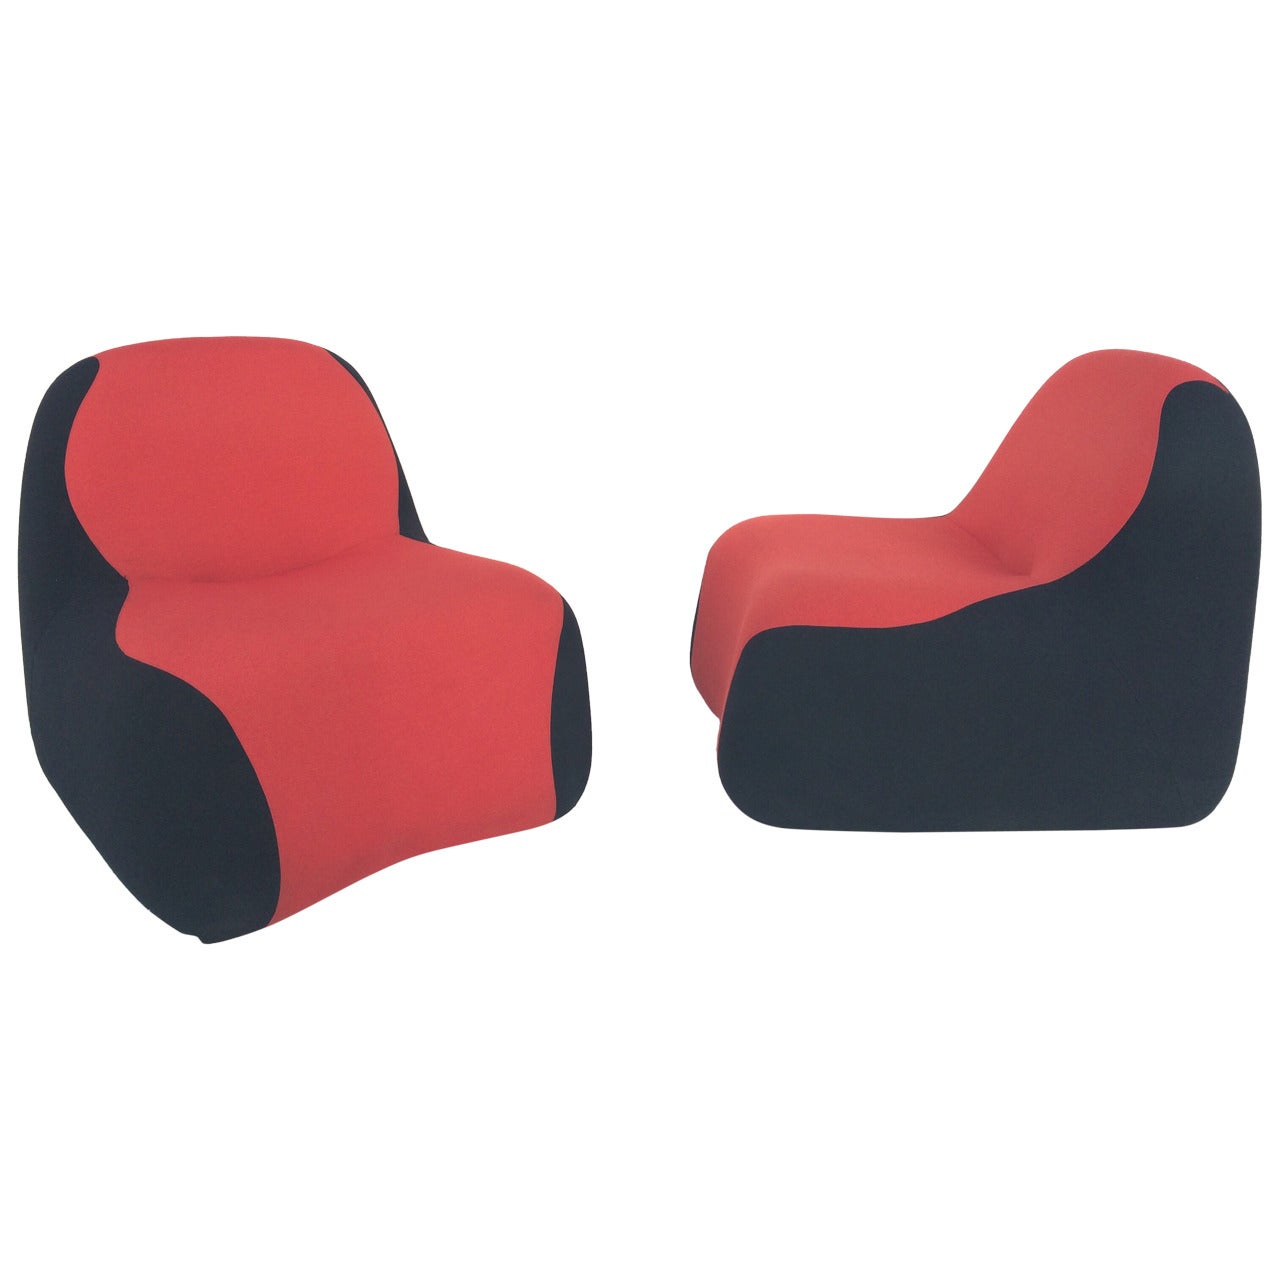 Pair of "Blob" Chairs Designed by Karim Rashid